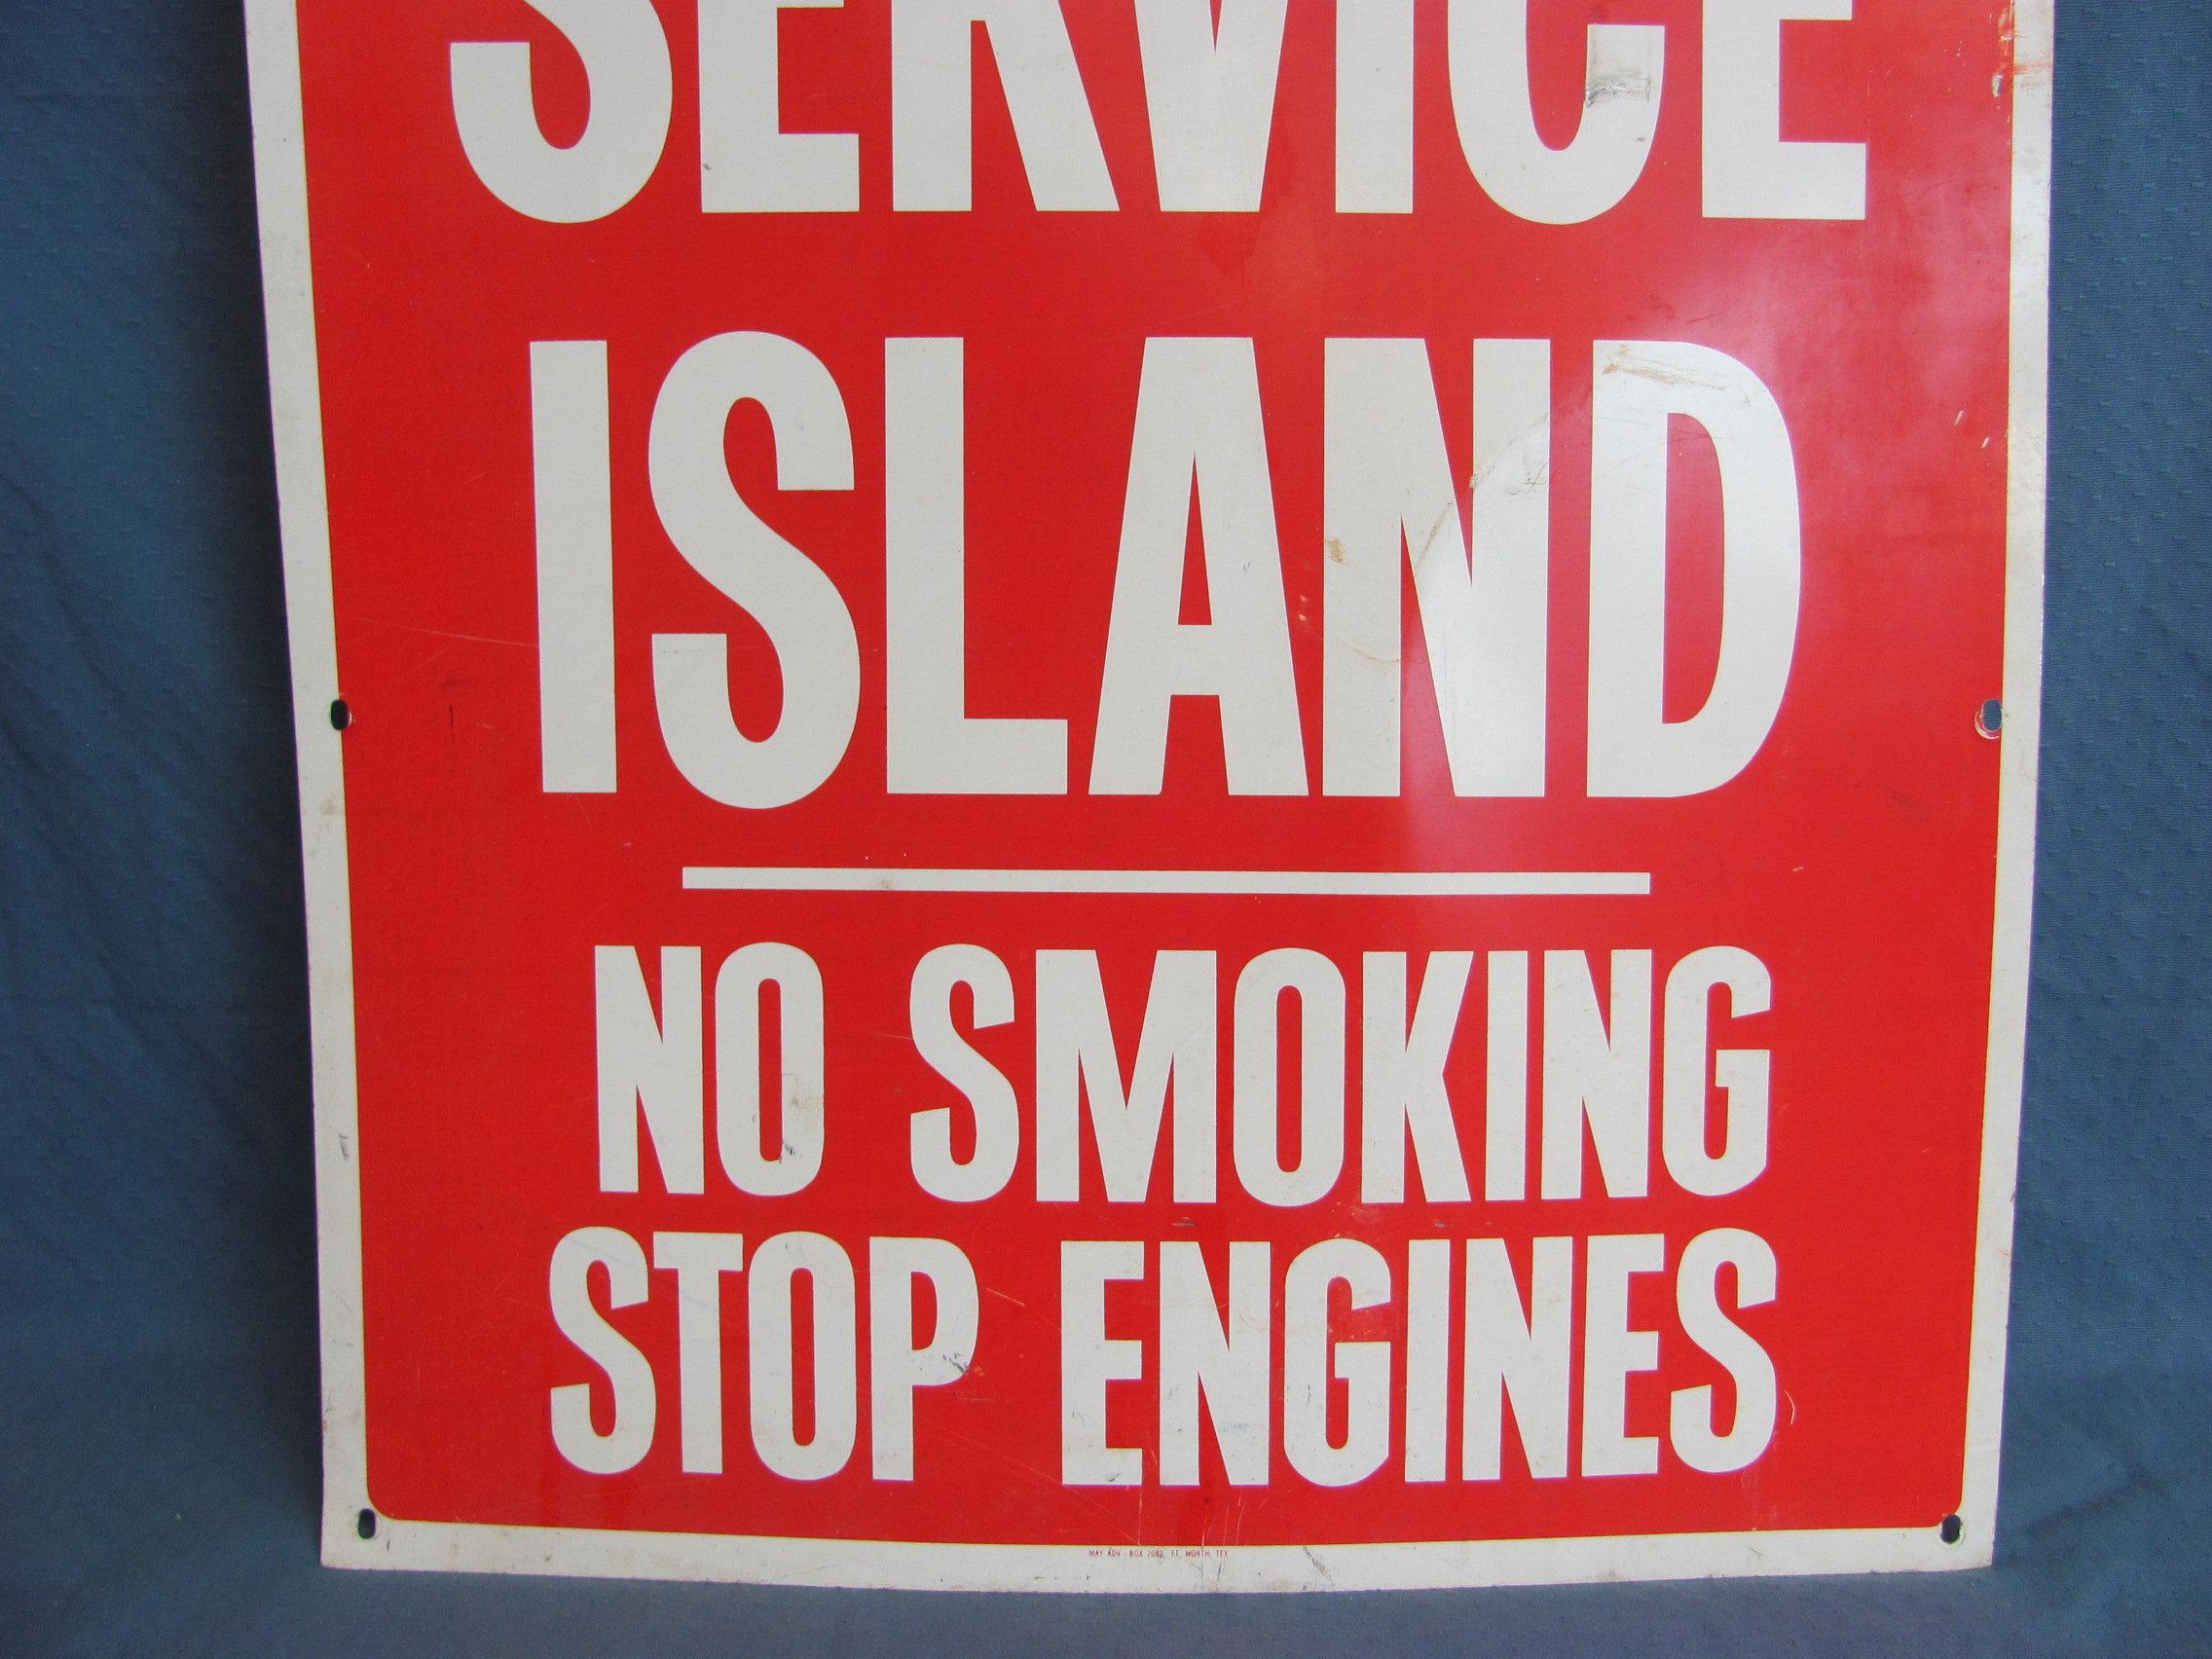 Metal Sign “Self Service Island – No Smoking – Stop Engines” - 36” x 24”